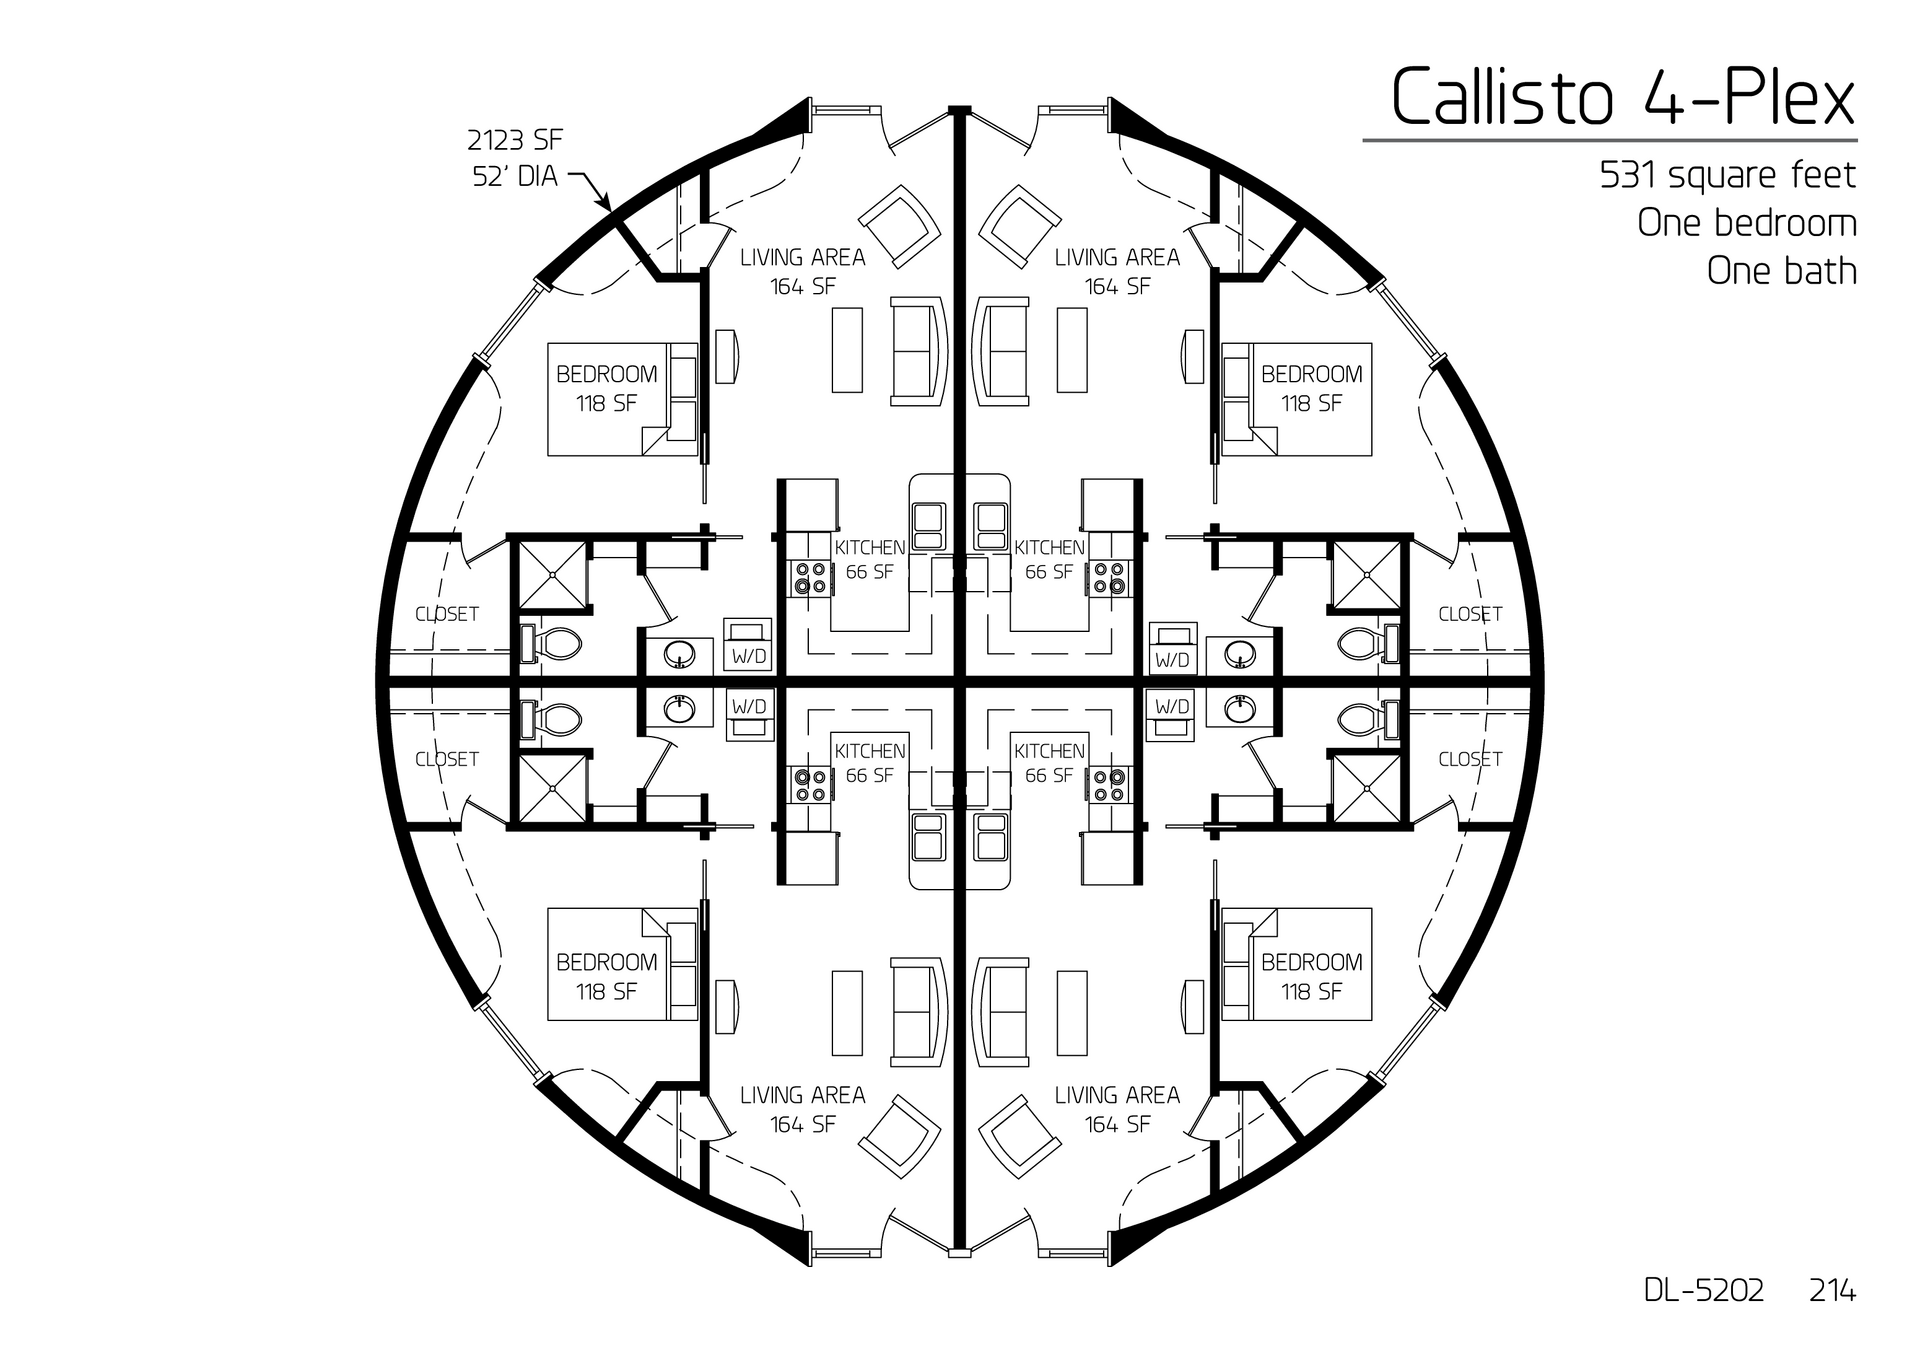 Callisto: A 52' Diameter, 2123 SF Four-Plex of One-Bedroom, One-Bath Apartments Floor Plan.